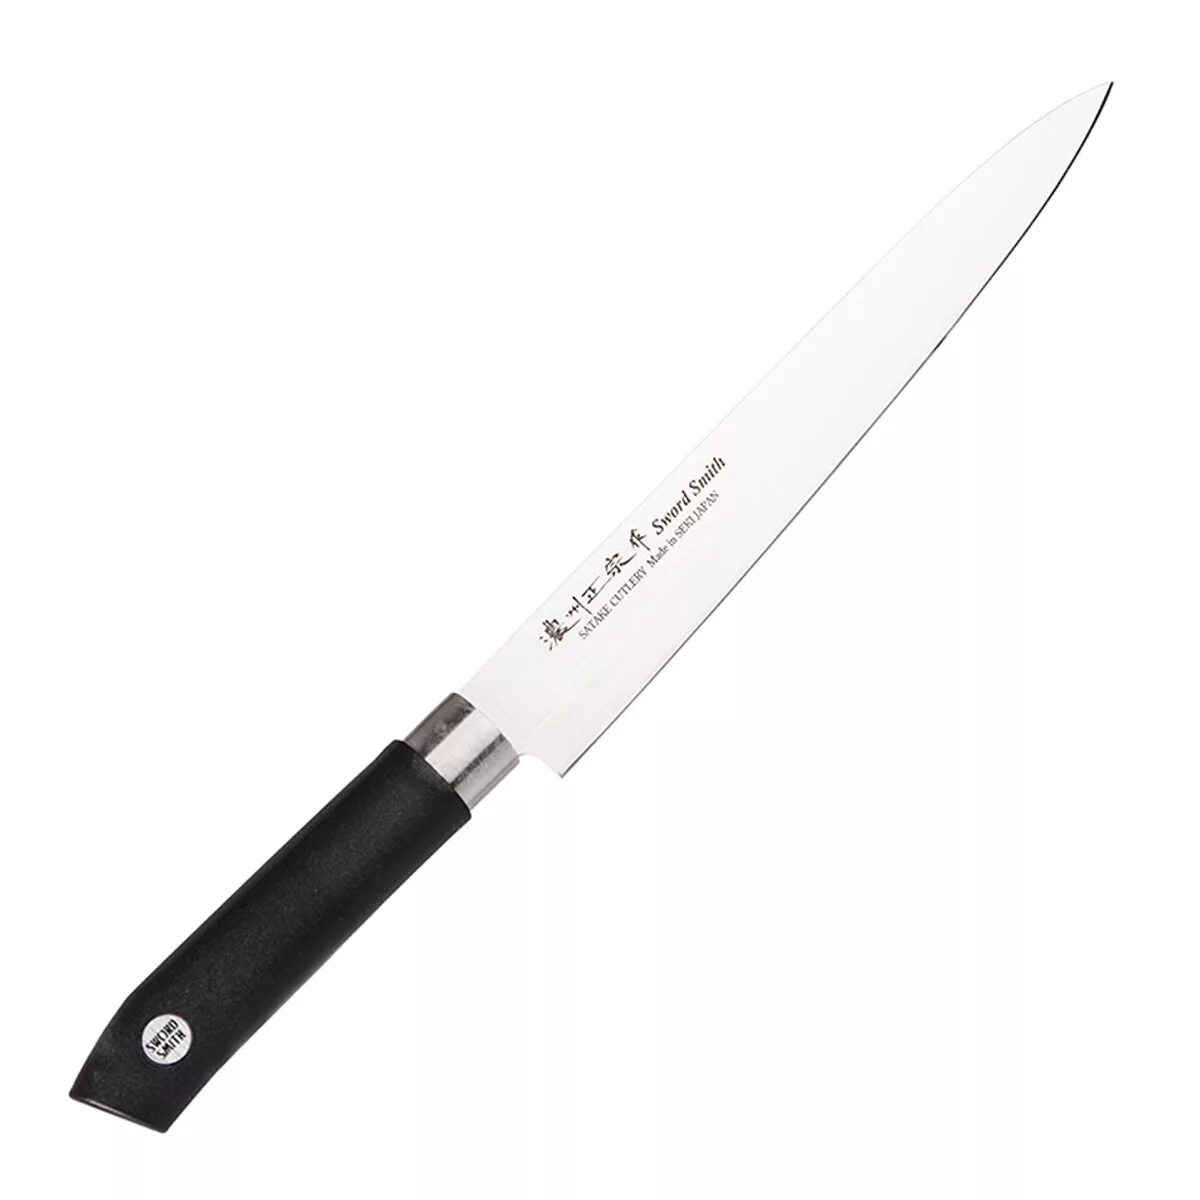 Янагибу нож. Японские кухонные ножи Satake. Satake Cutlery Sword Smith ножи. Нож Masahiro шеф 18. Нож филейный Янагиба японский производитель Масахиро катлери.